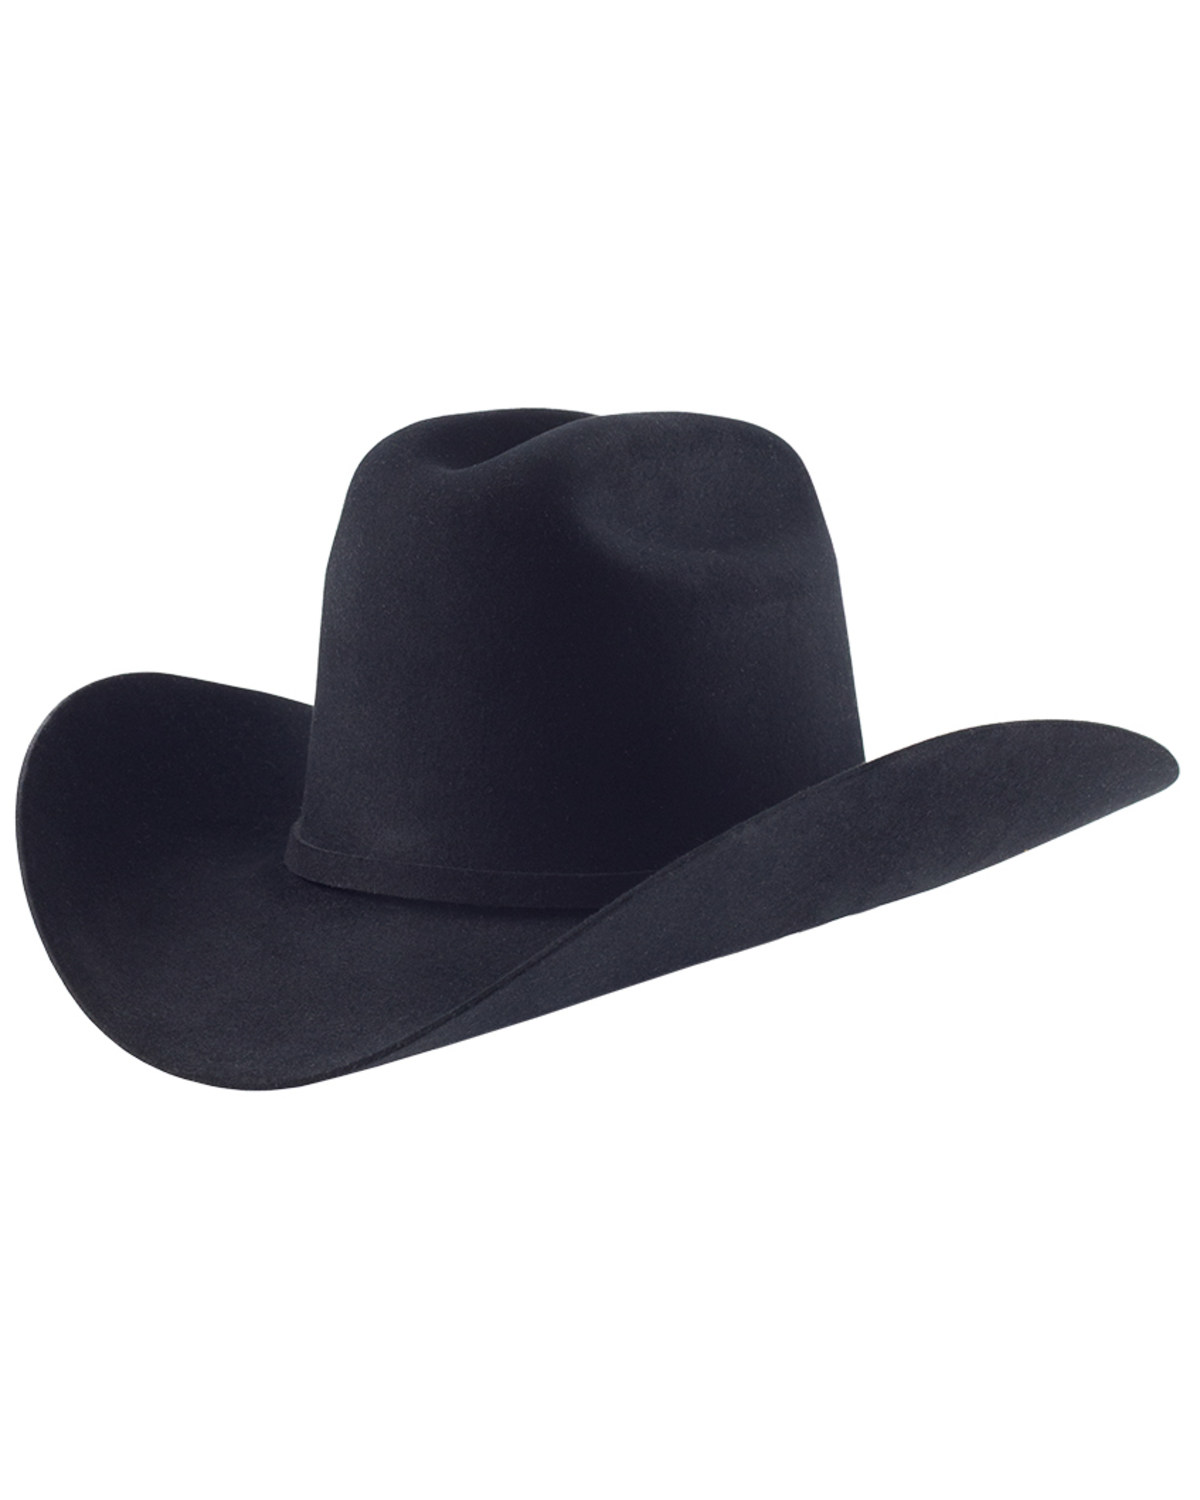 Stetson El Patron 30X Felt Cowboy Hat